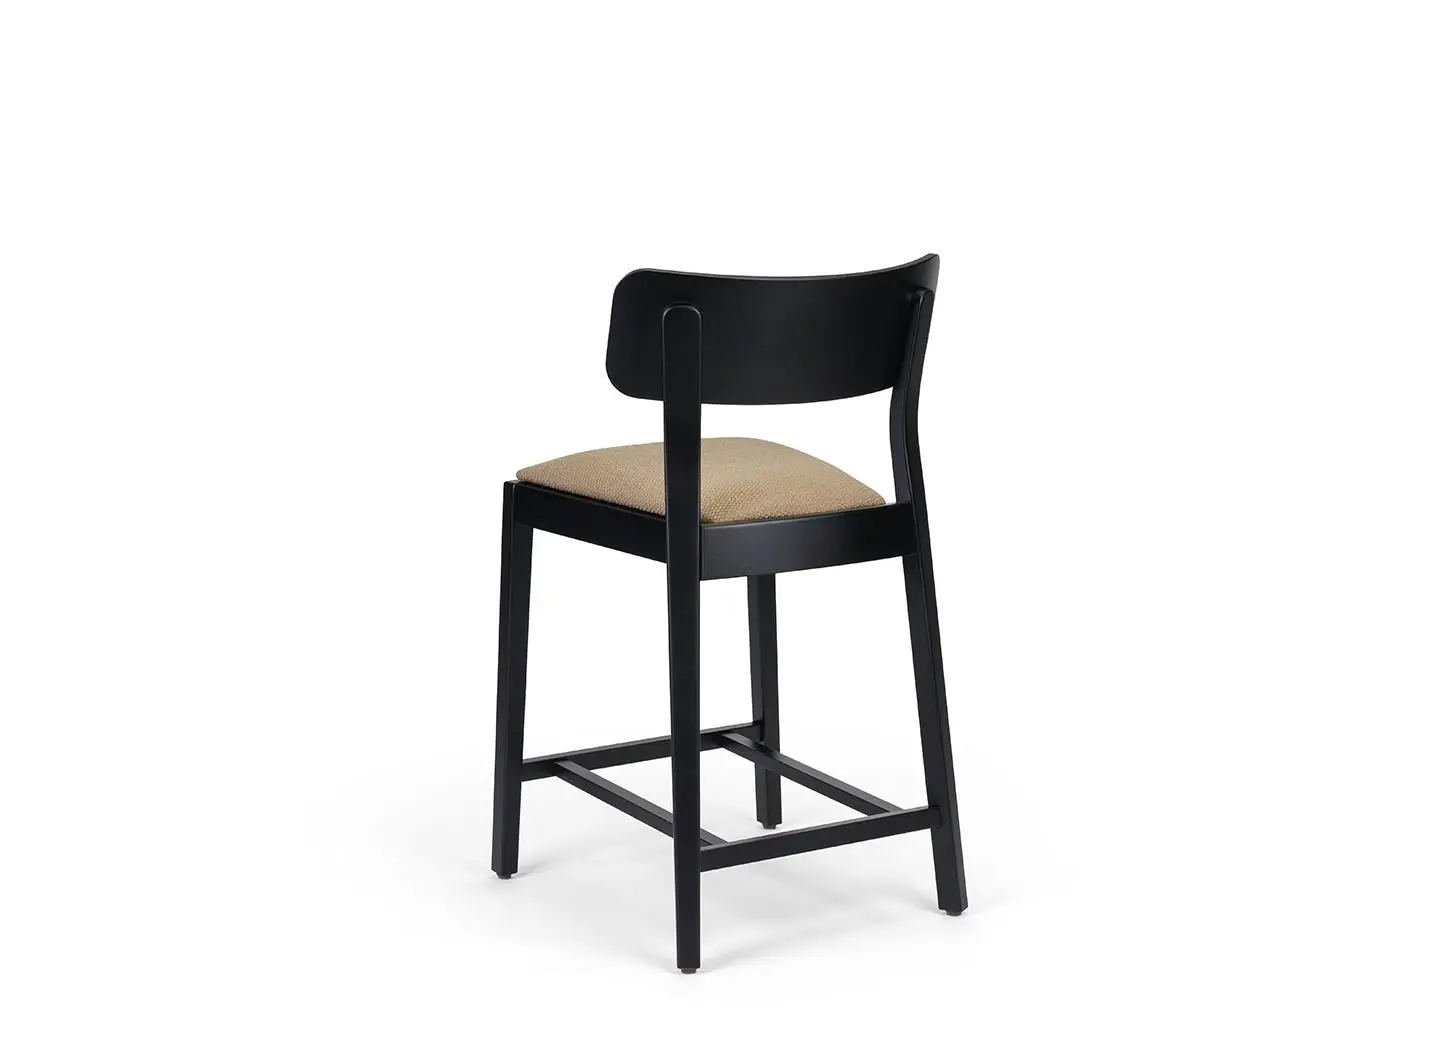 Suzanne bar counter stools by CarlesiTonelli Studio